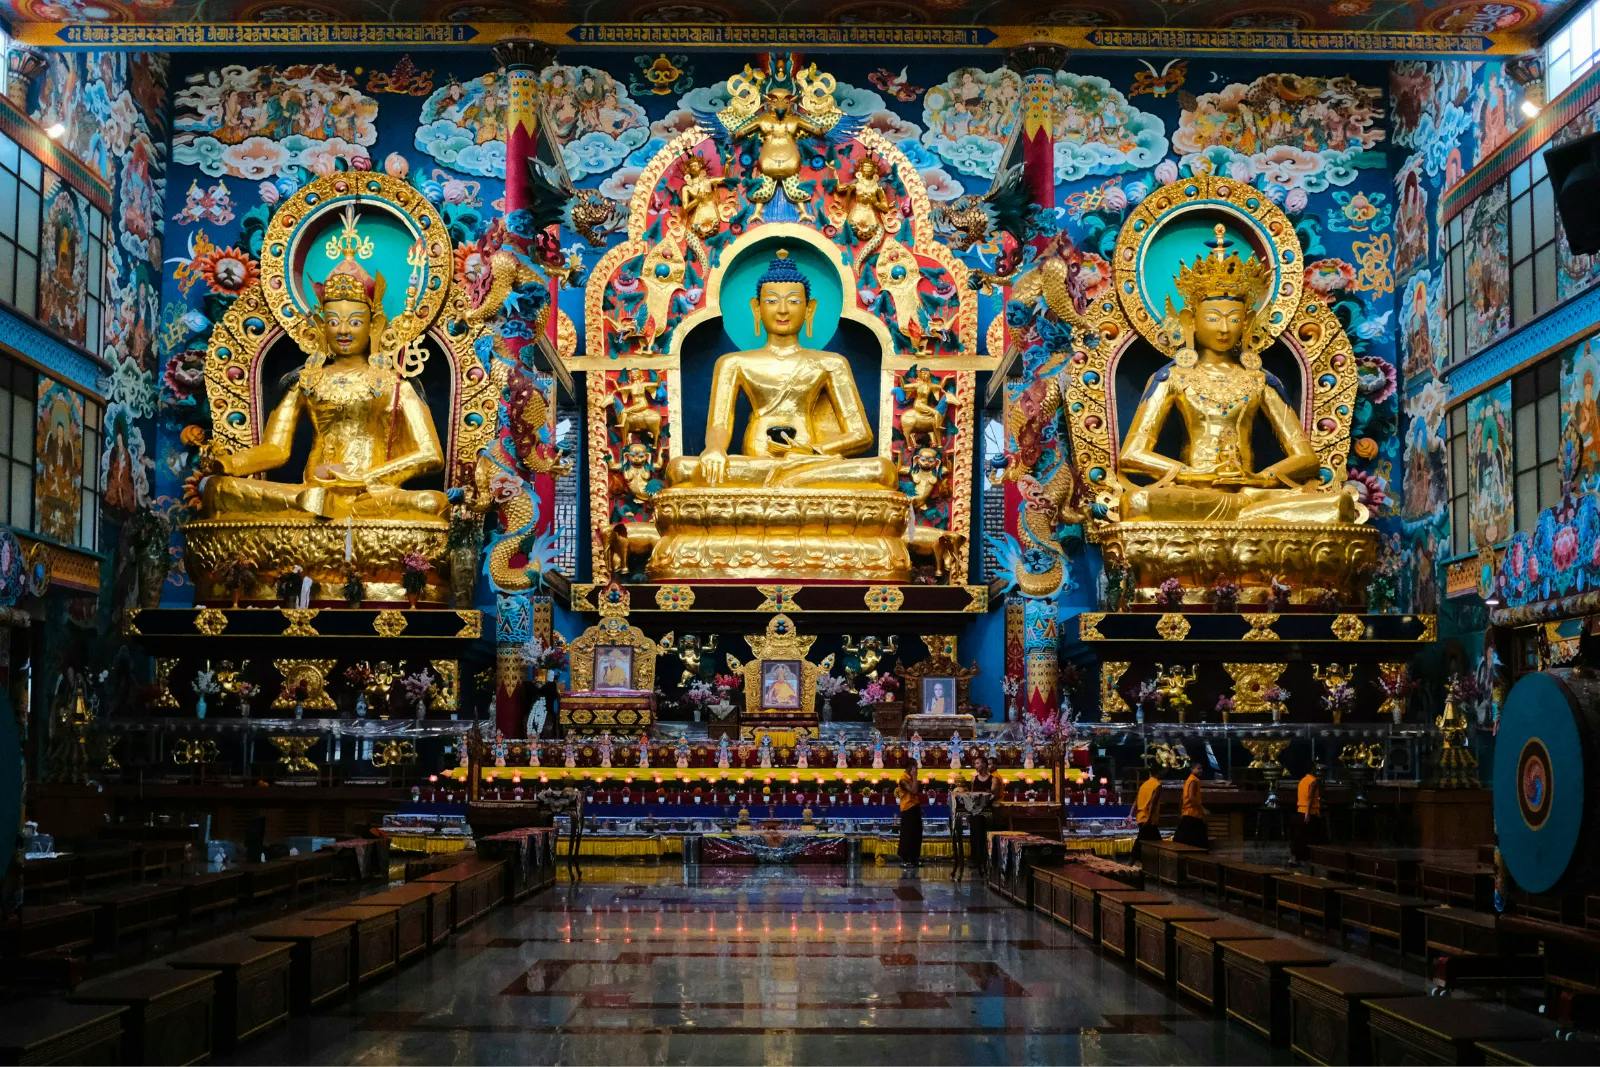 Coorg Trekking Adventure: Scenic Beauty of Gilded Buddhist Gods"